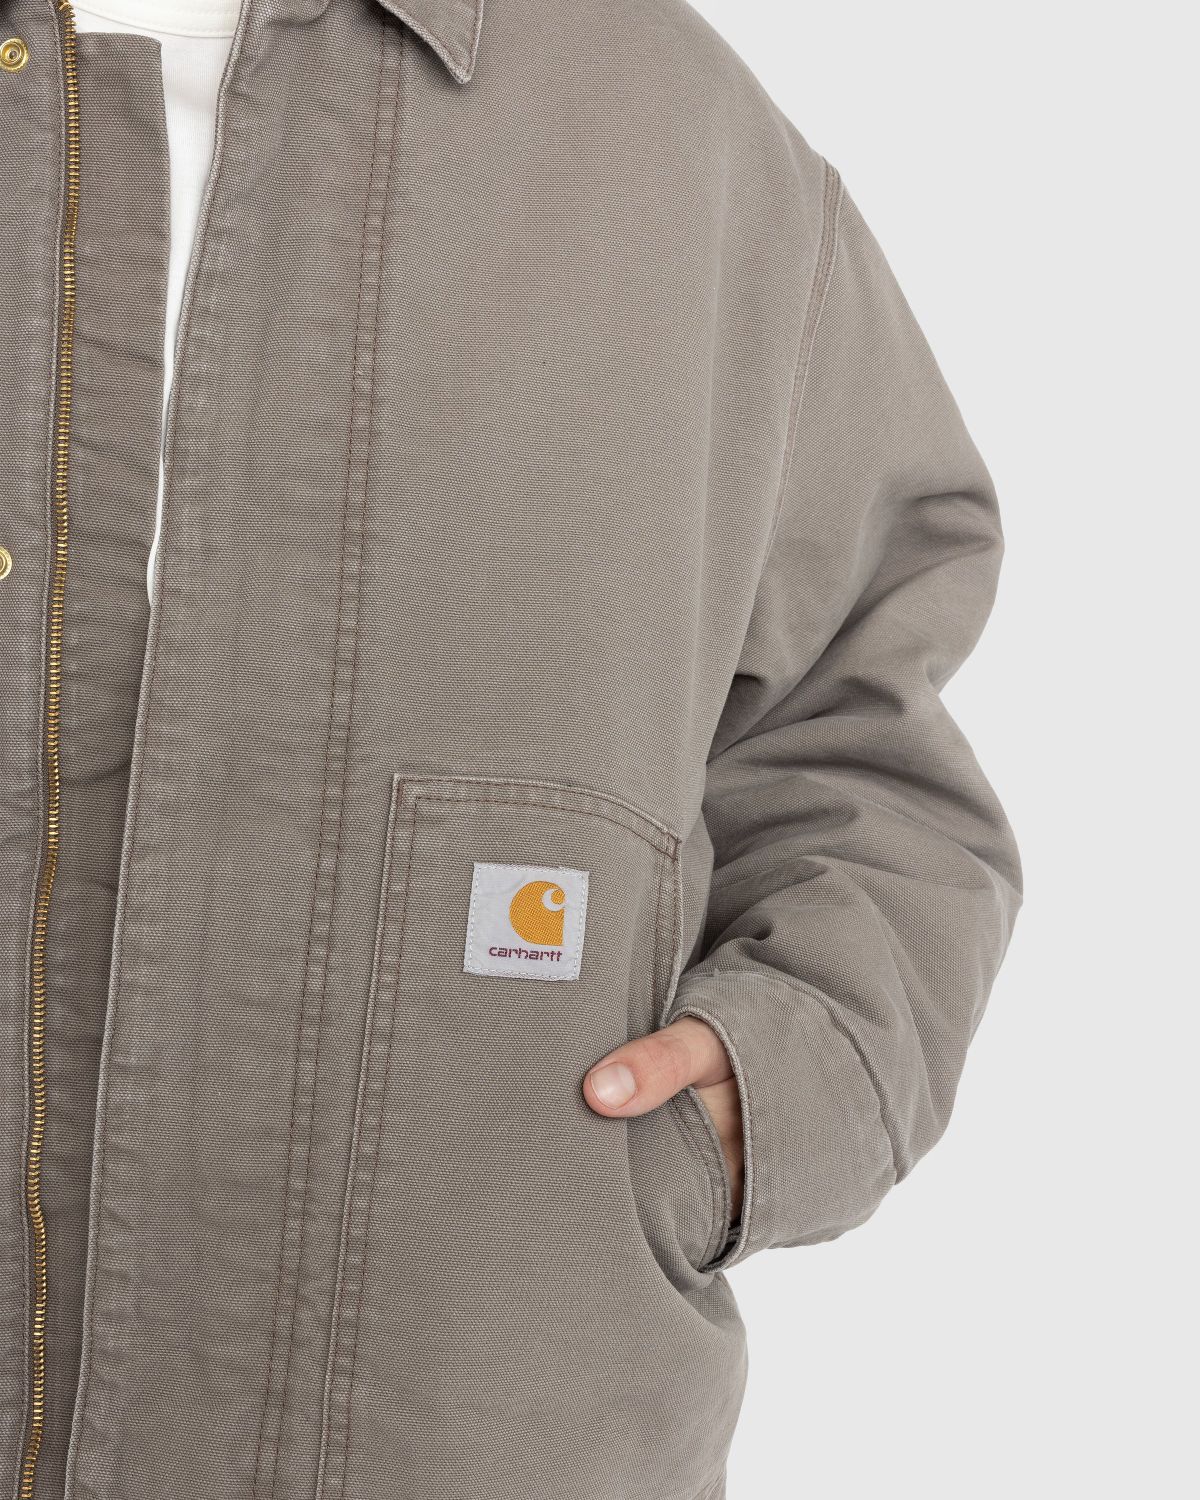 Carhartt WIP – OG Arcan Jacket Barista/Aged Canvas - Outerwear - Multi - Image 4